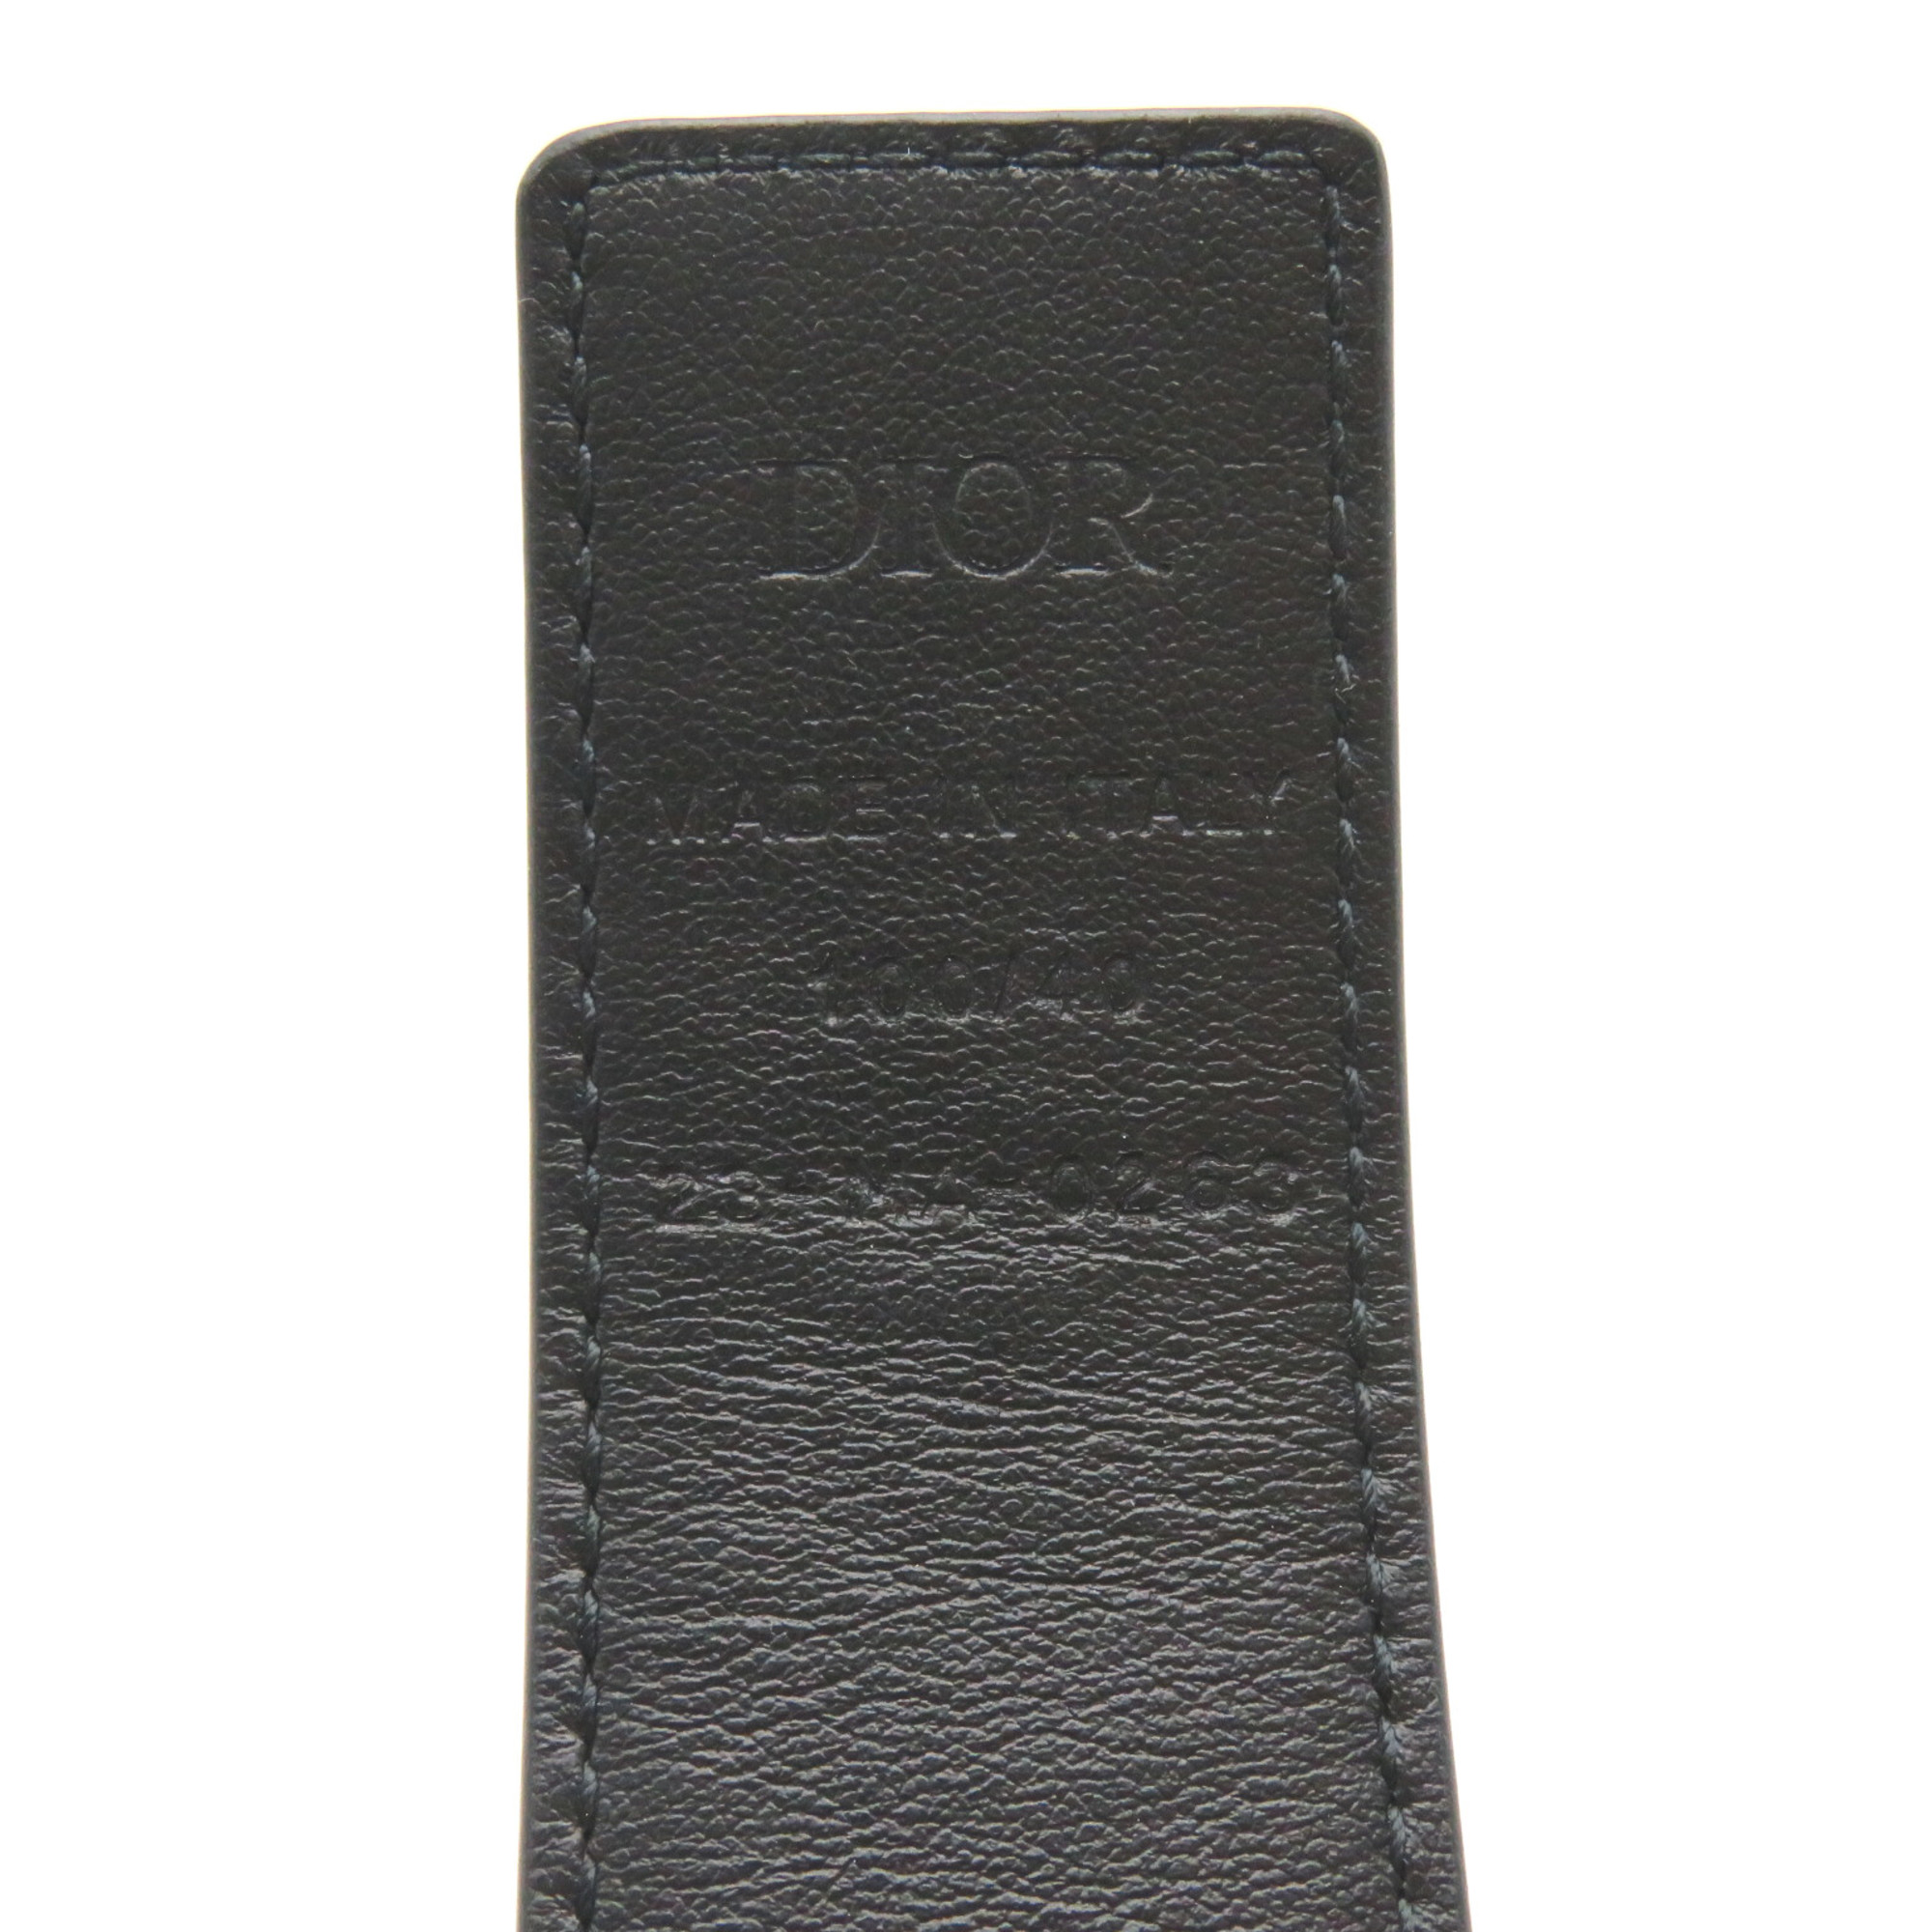 DIOR HOMME belt Black leather Grained calf 4371RVDOVH00N100